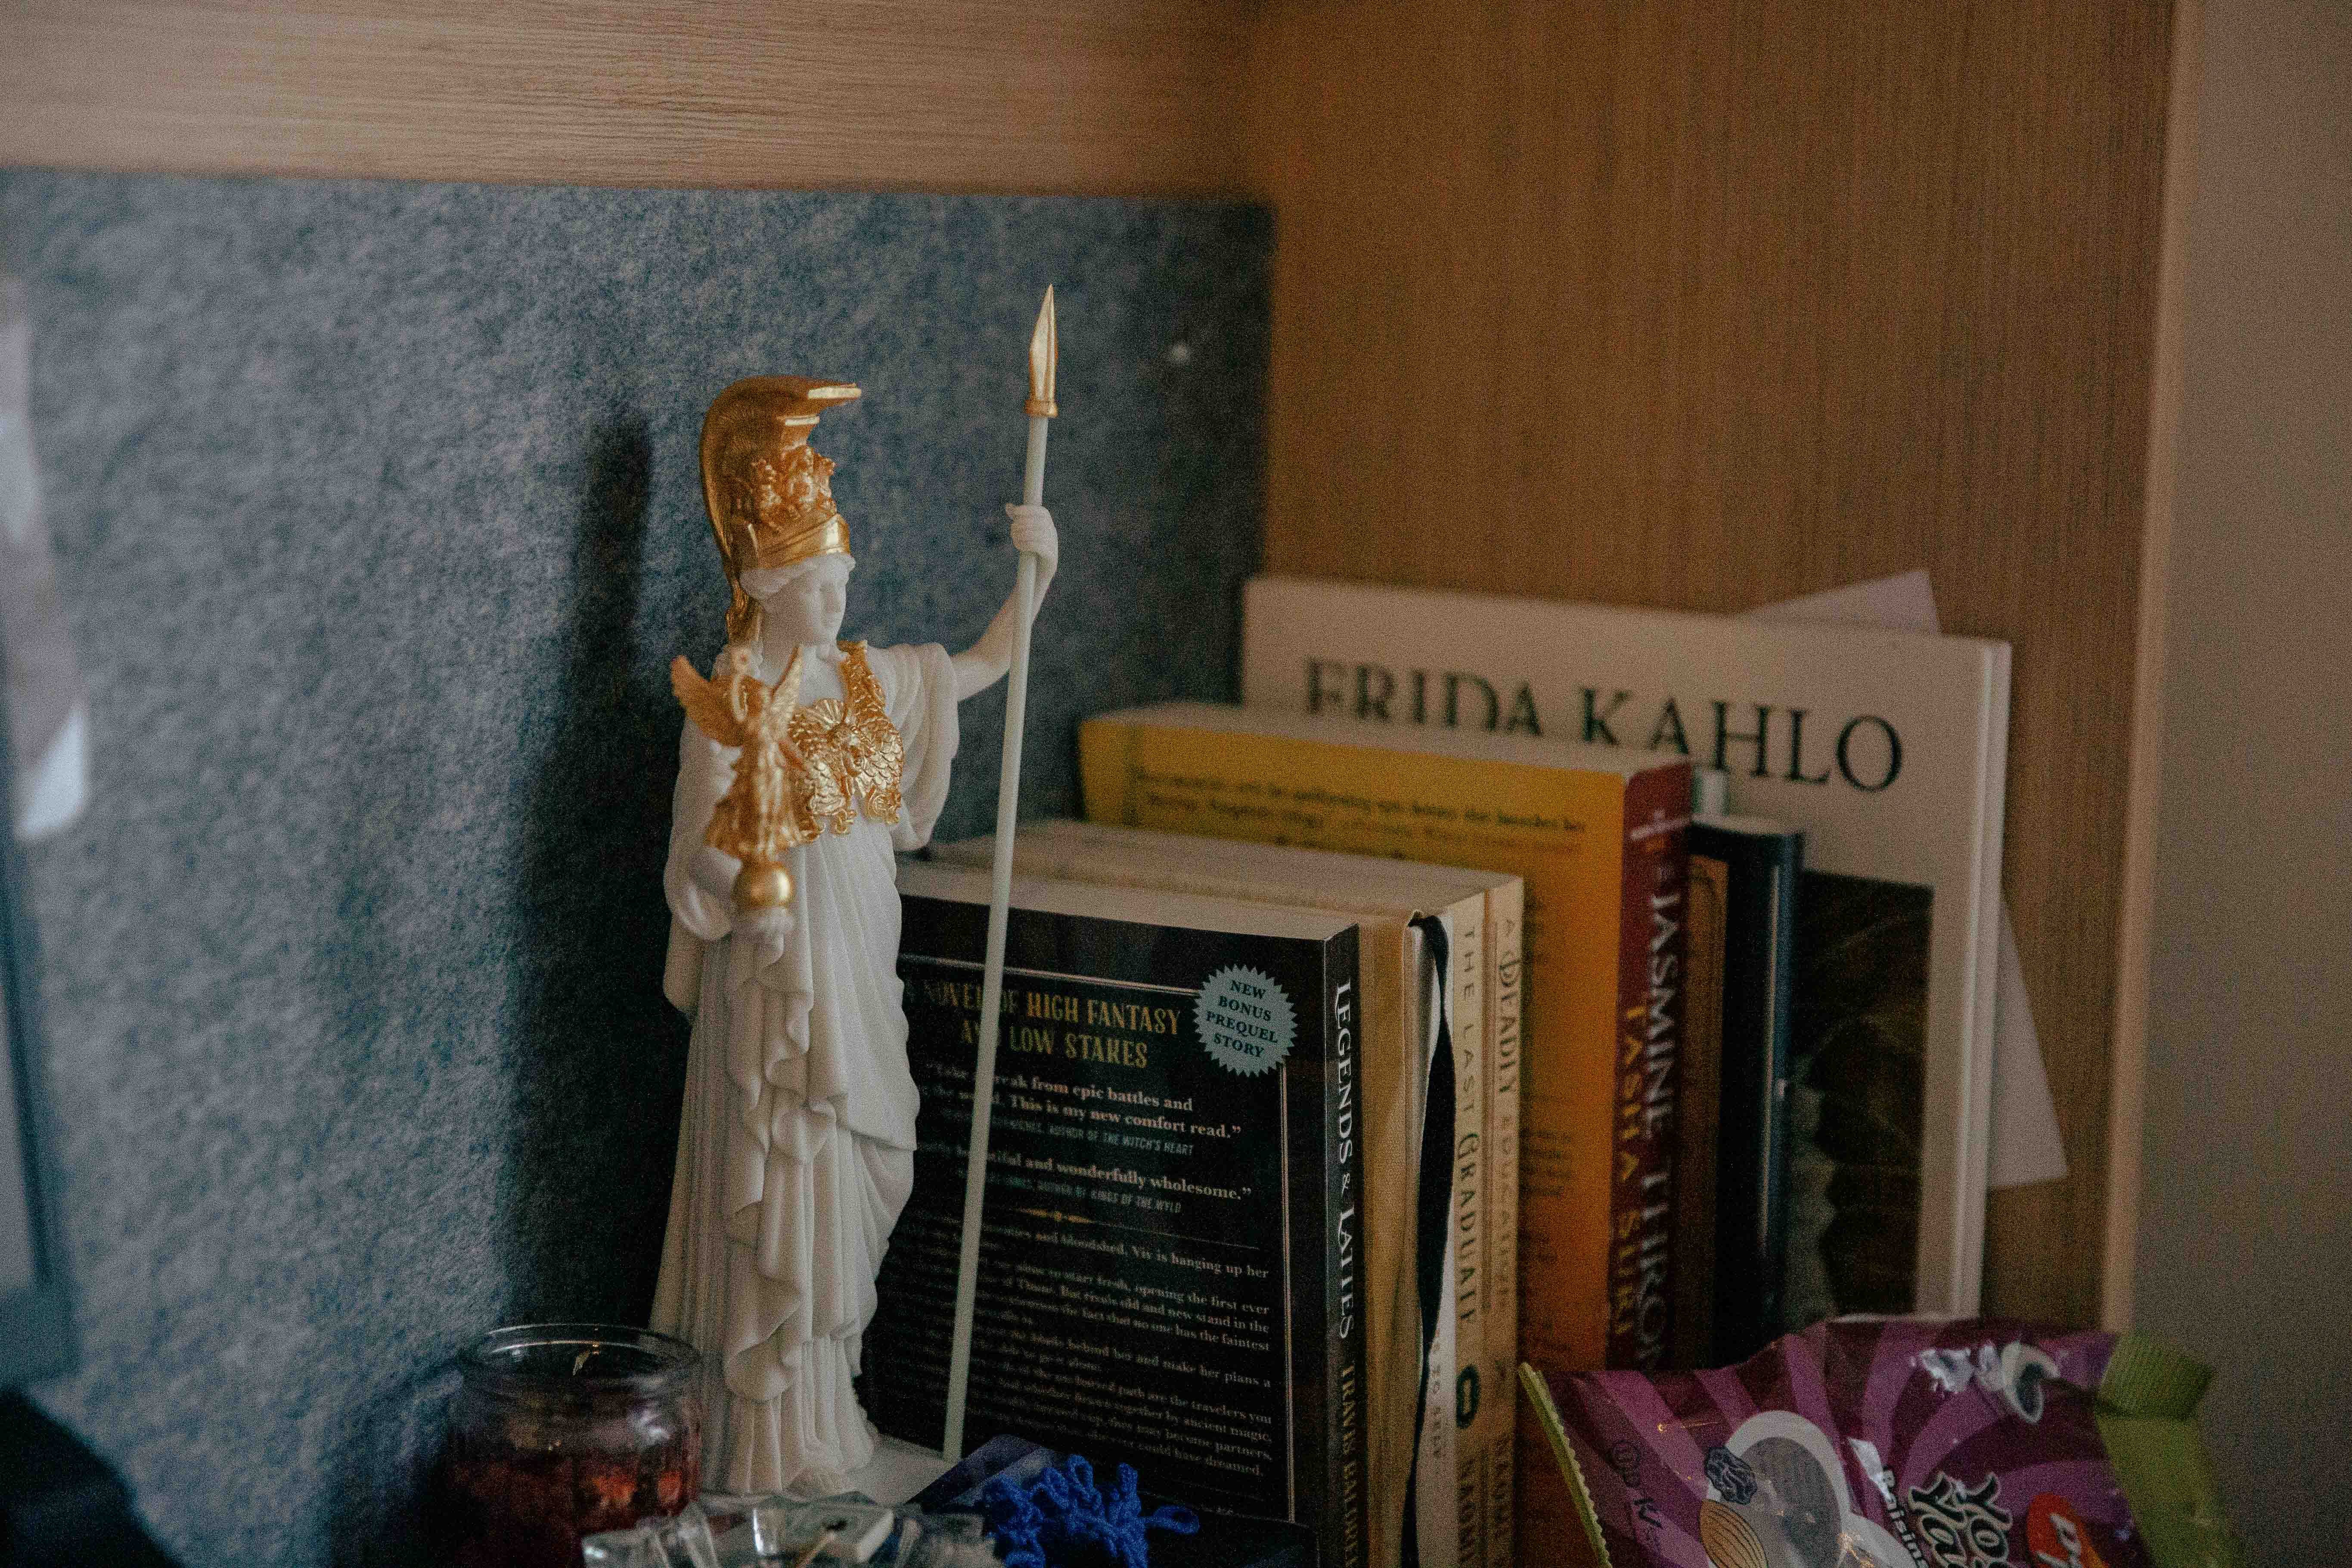 A statue of Athena on Tan's desk motivates him to study.